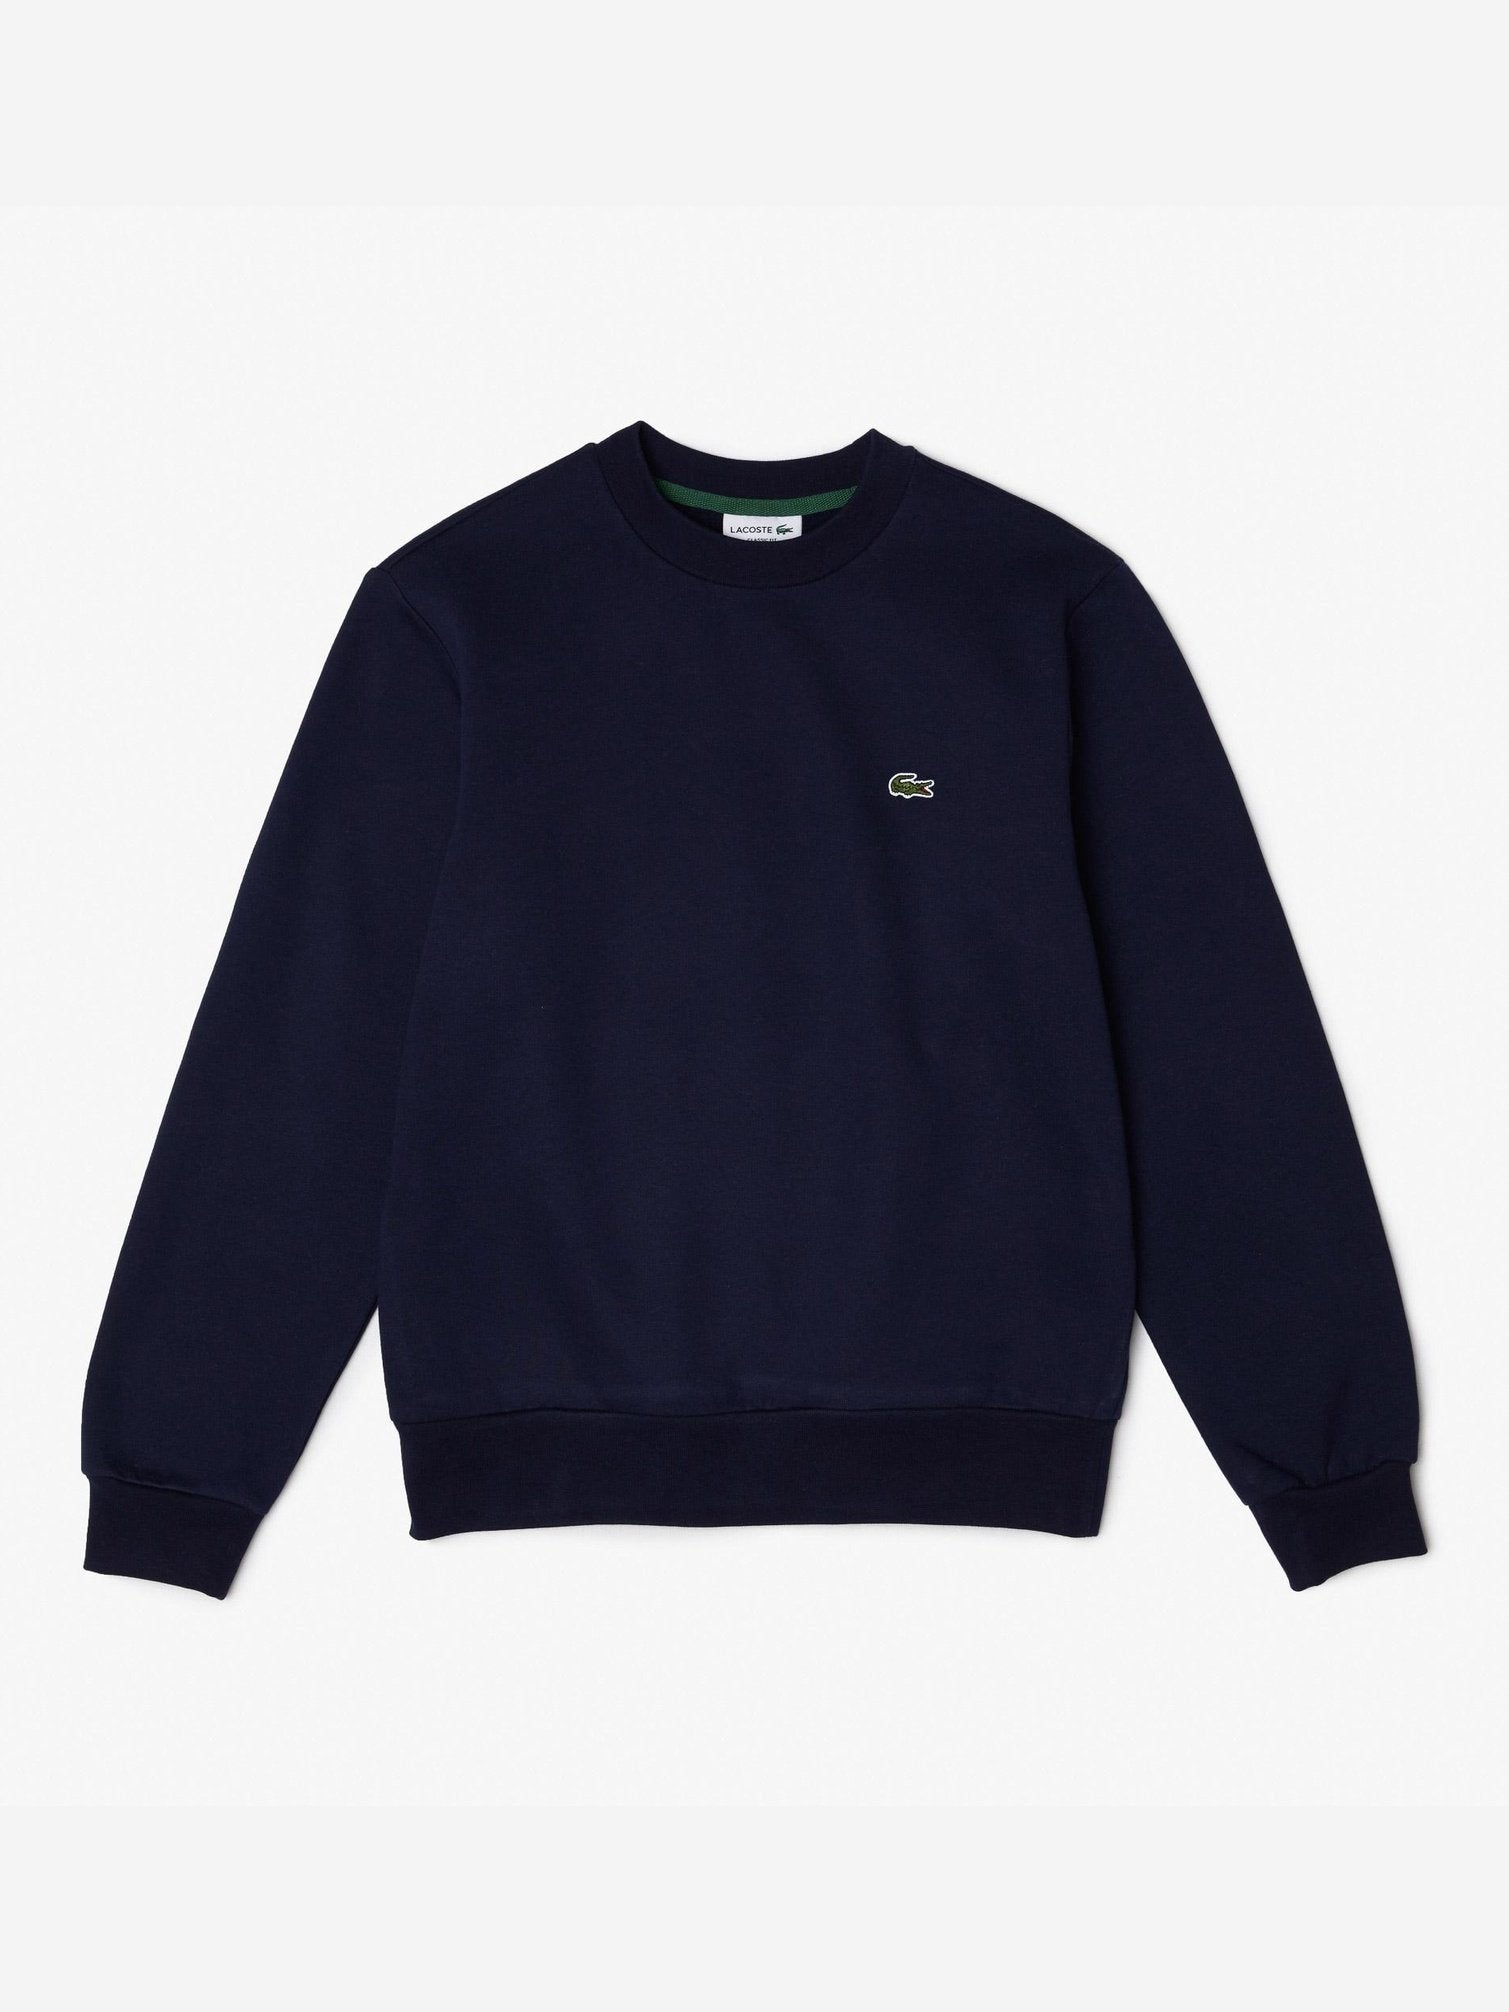 Lacoste Men's Organic Brushed Cotton Sweatshirt Navy Blue SH9608-51 166.